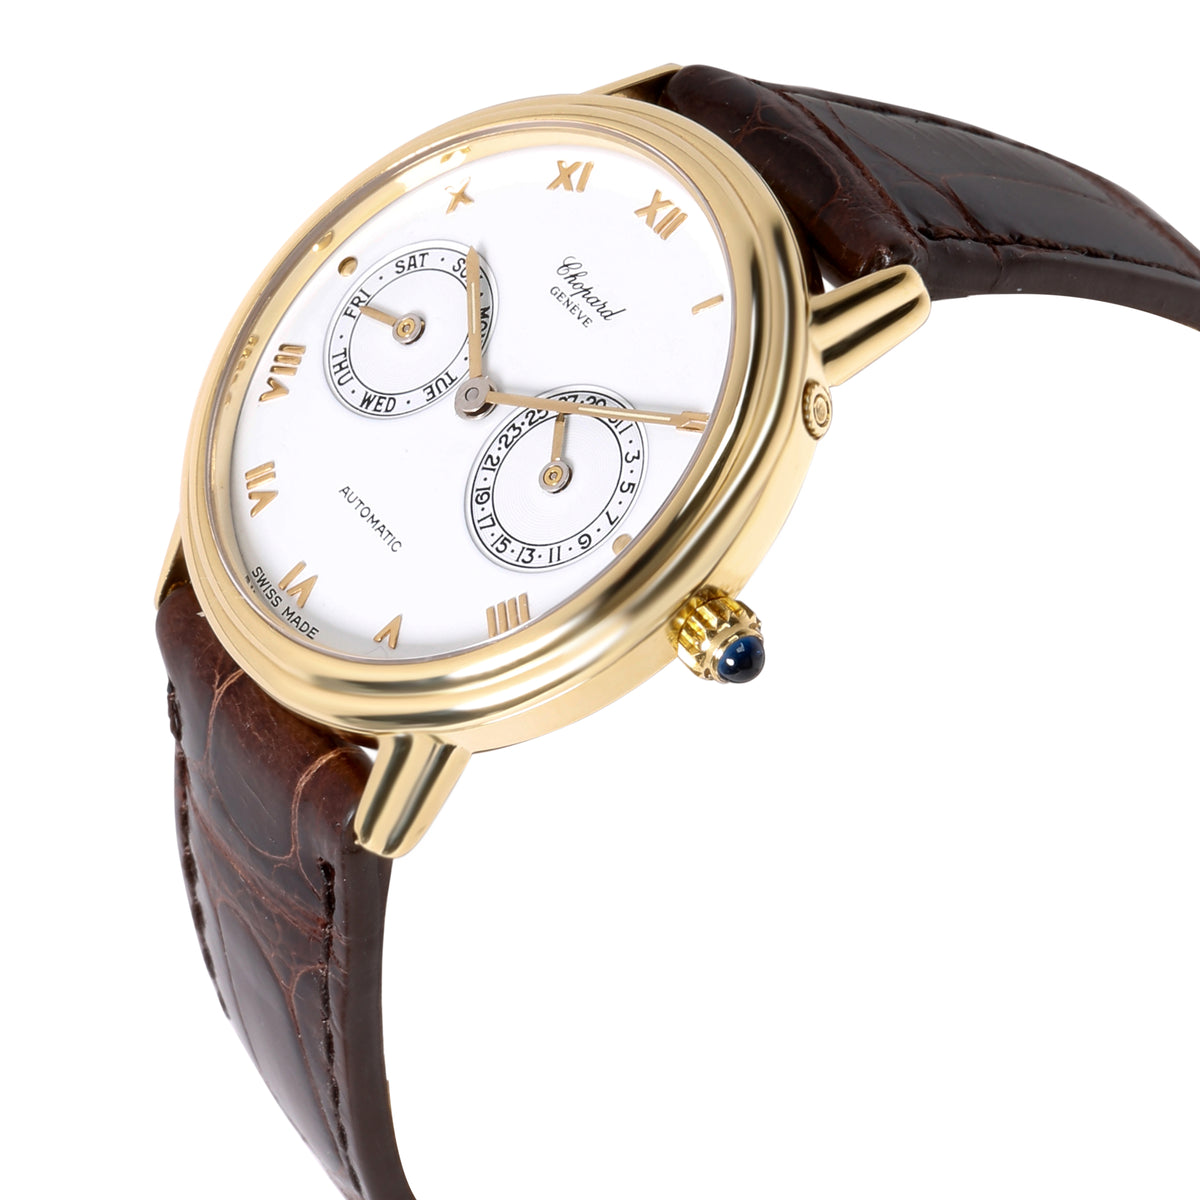 Chopard Linea D'Oro 1130 Unisex Watch in 18kt Yellow Gold